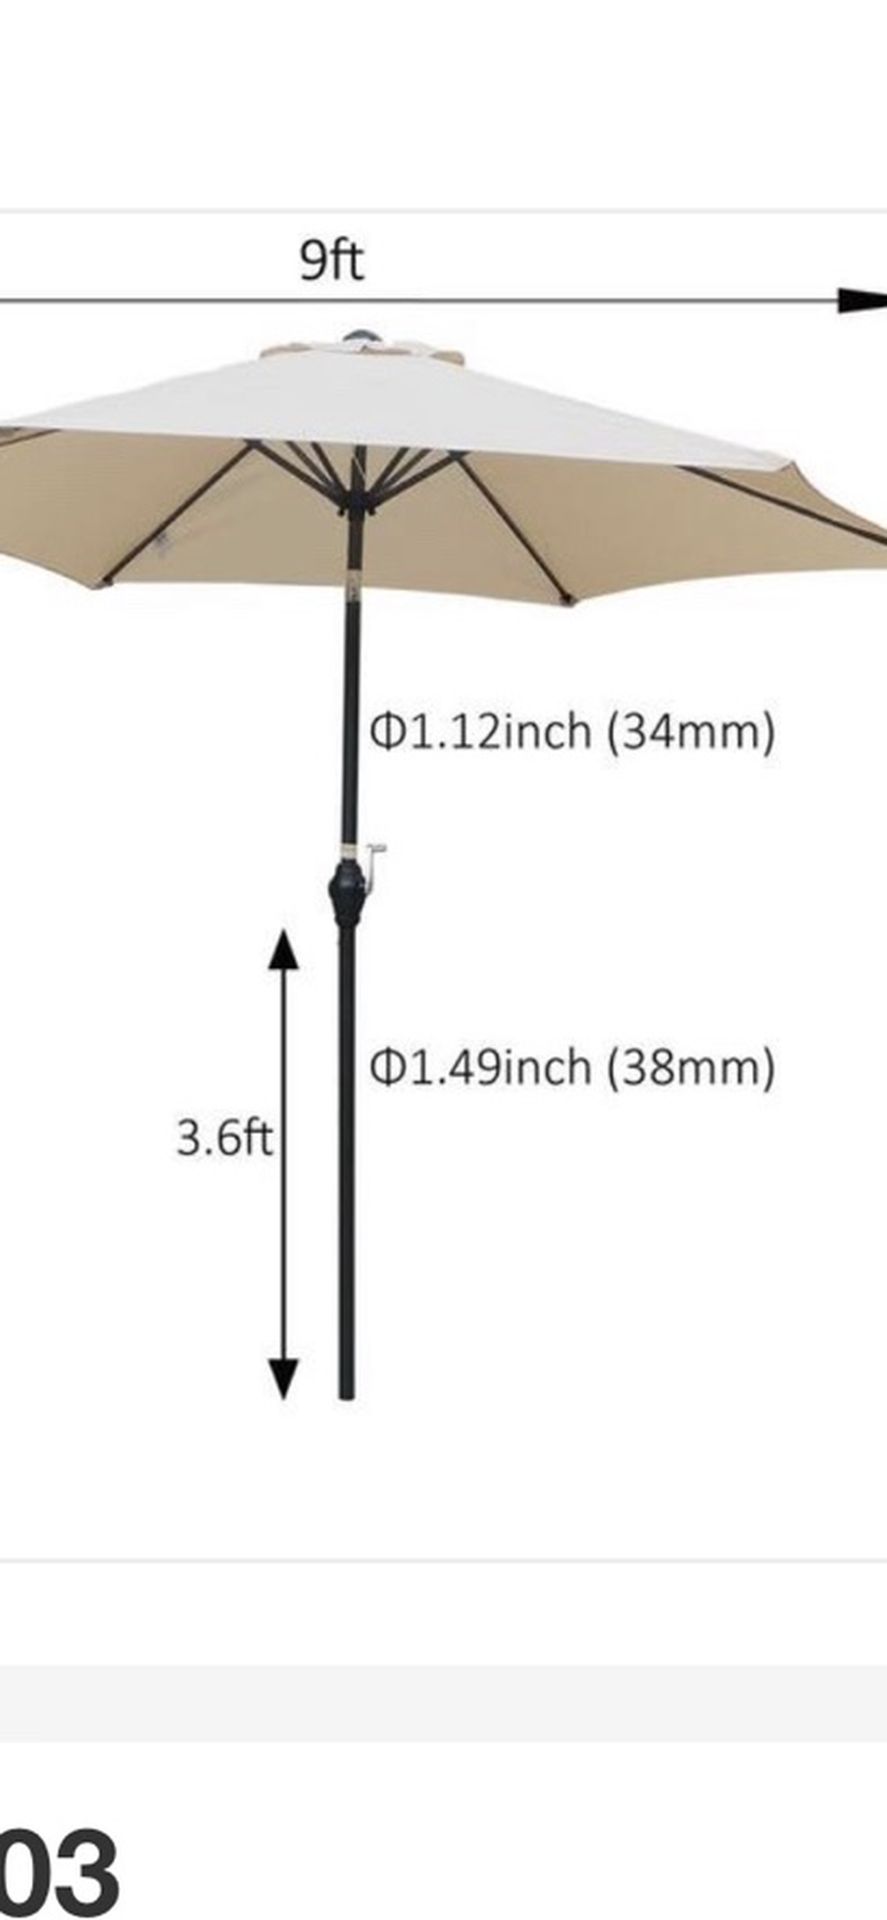 9ft High quality Umbrella New